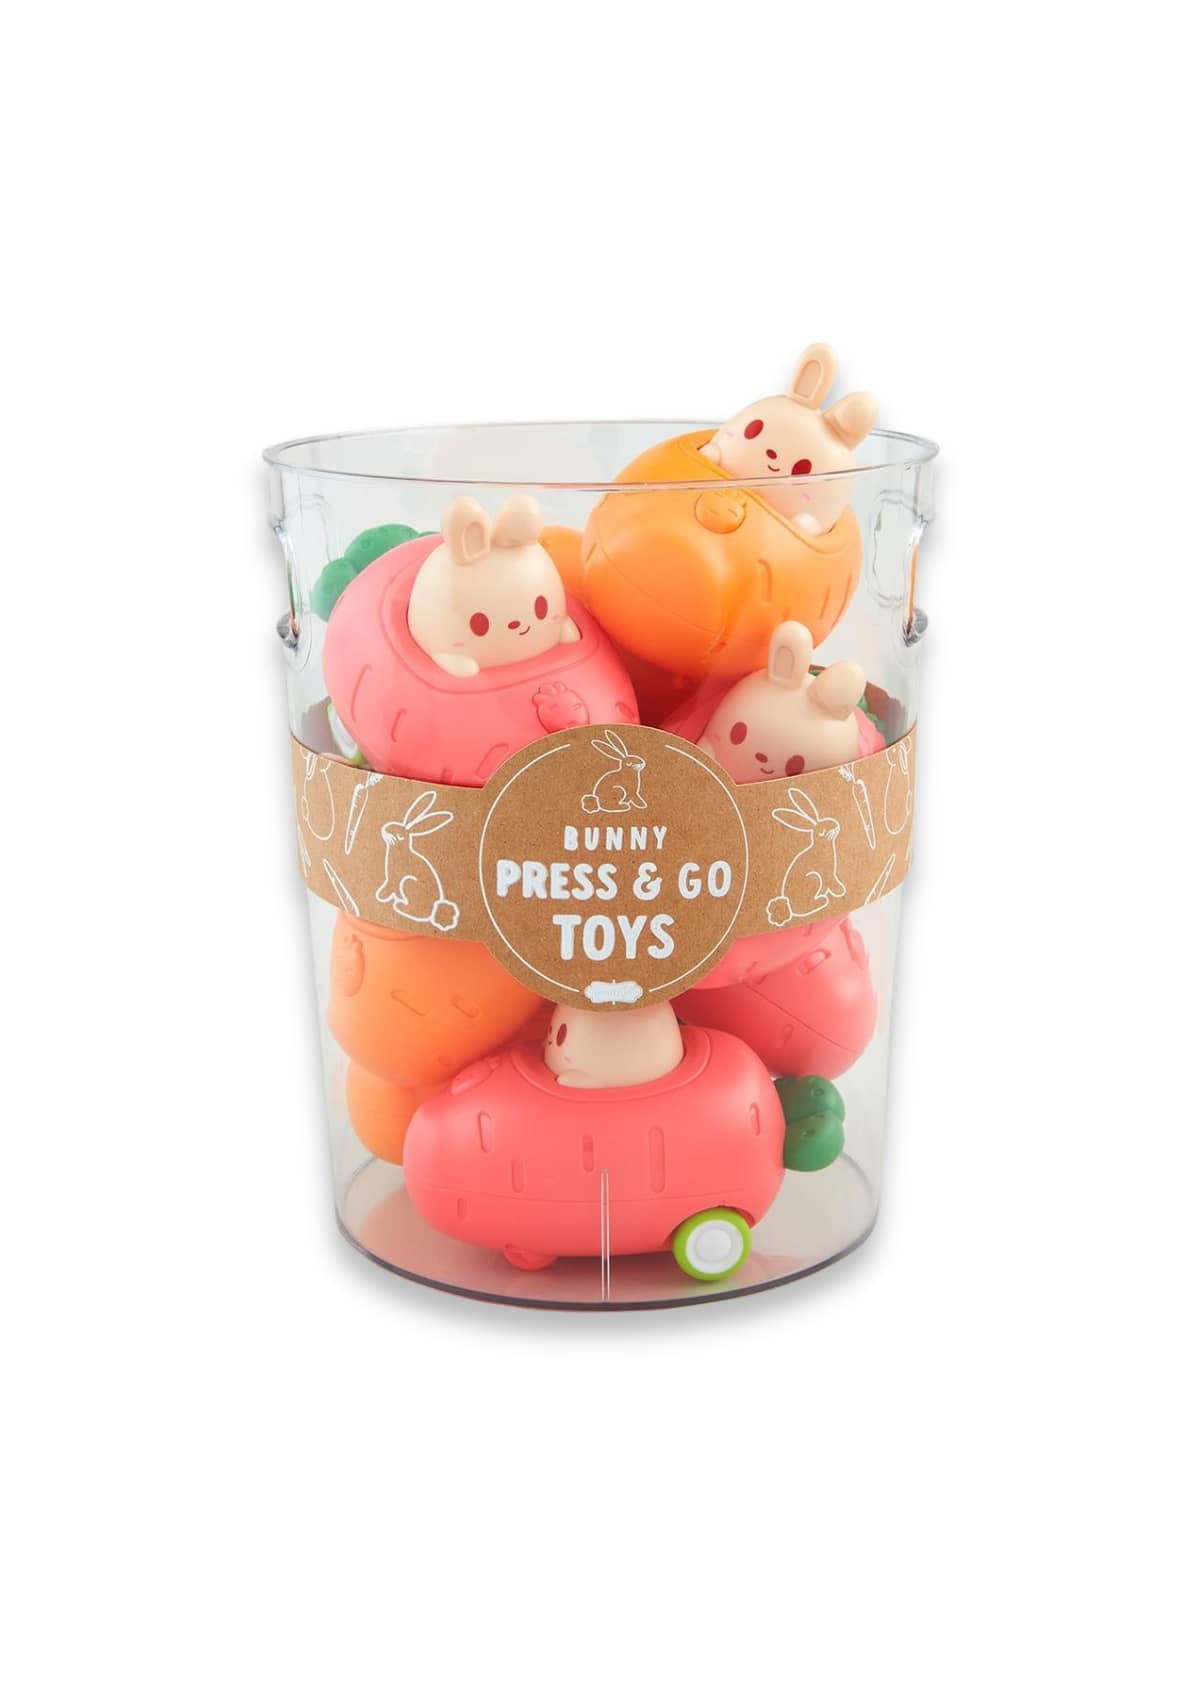 Bunny Carrot Baby Toy -Mud Pie / One Coas- Ruby Jane-